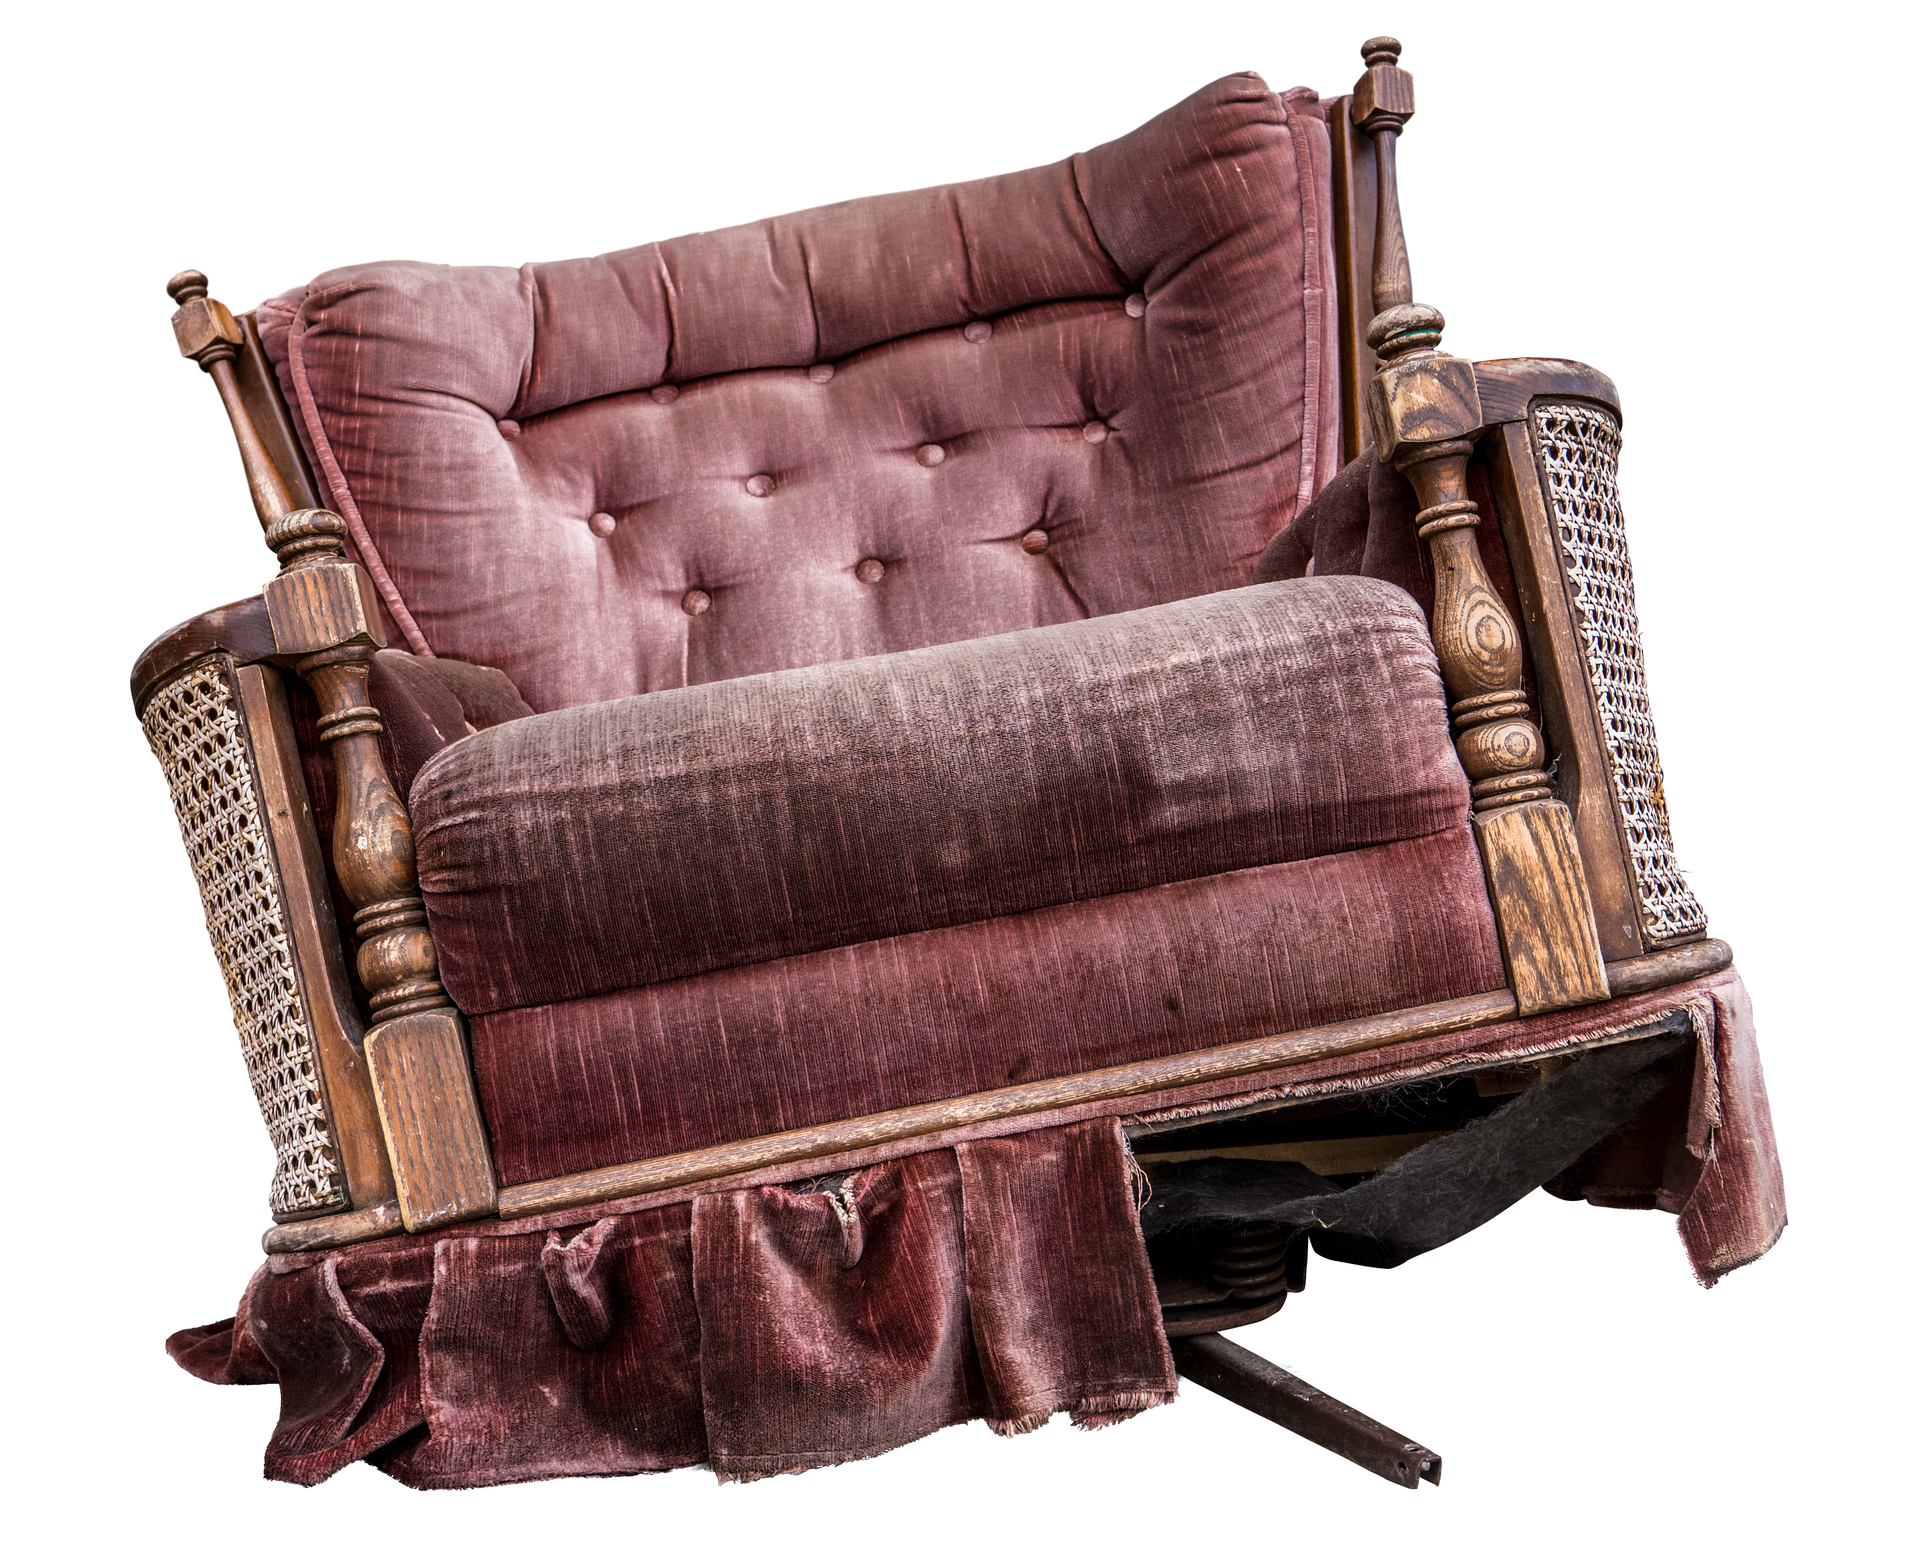 An Old Damaged Vintage Purple Armchair